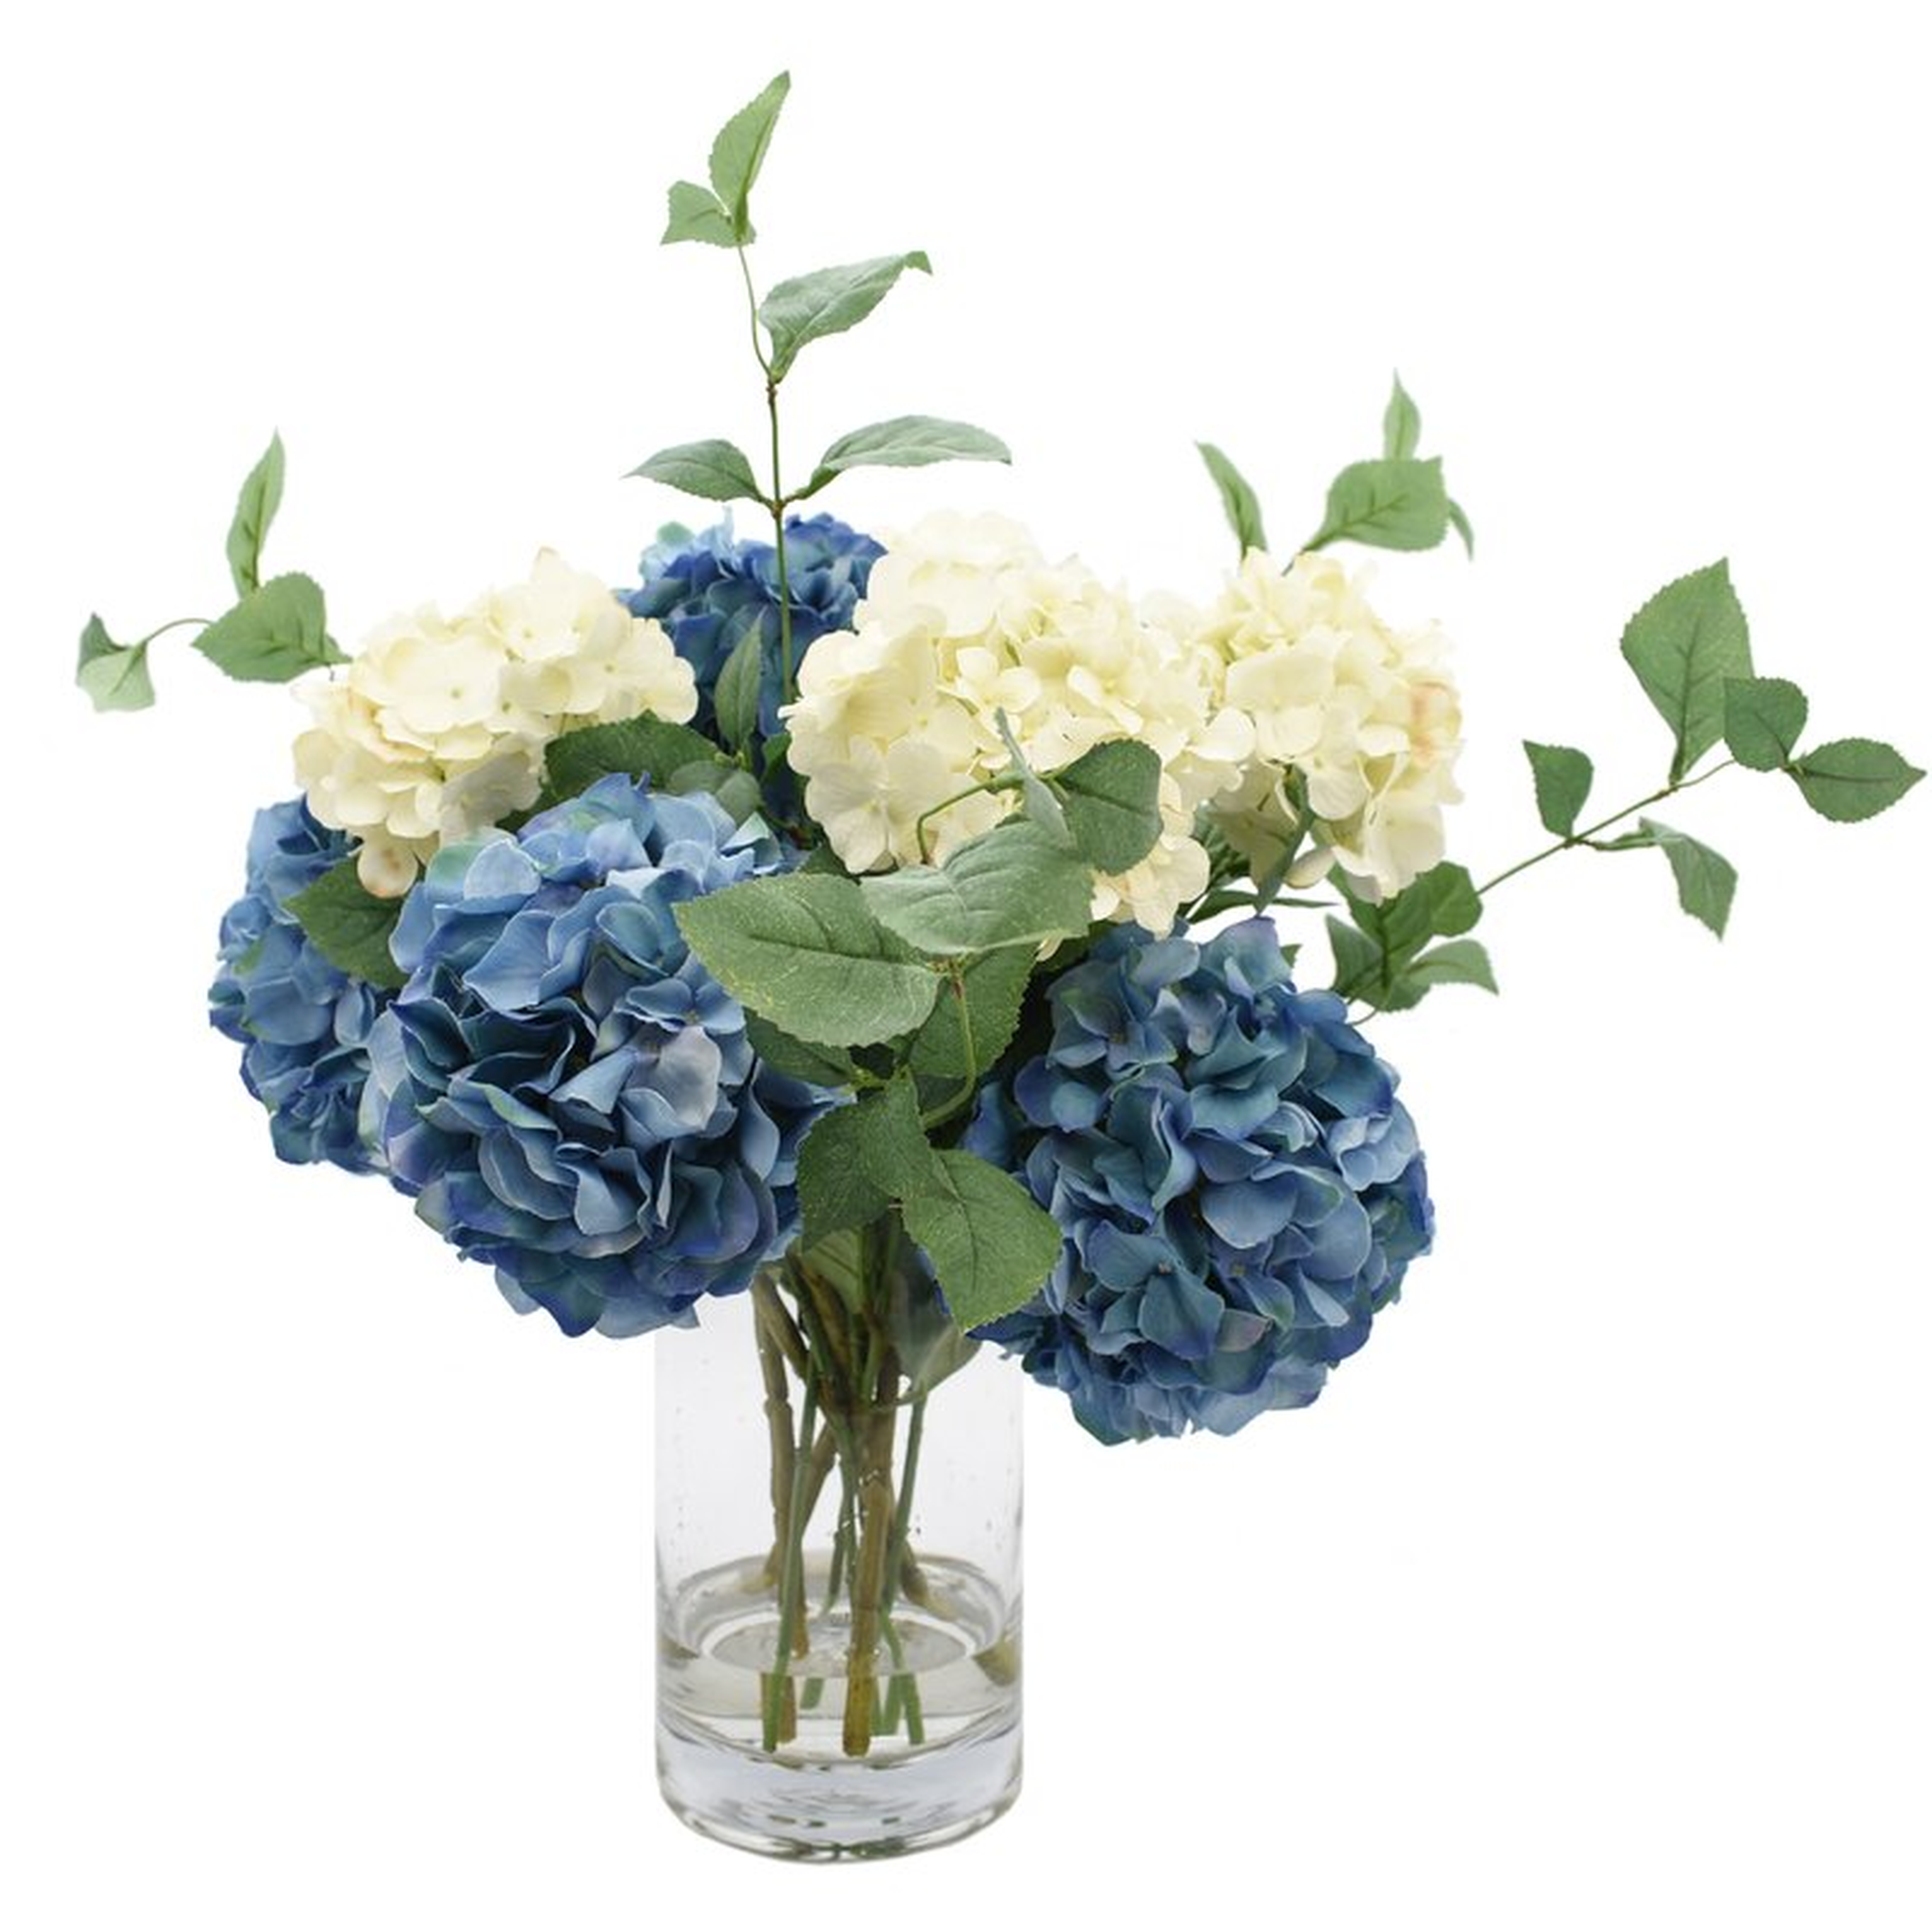 Hydrangeas Floral Arrangements in Vase - Wayfair